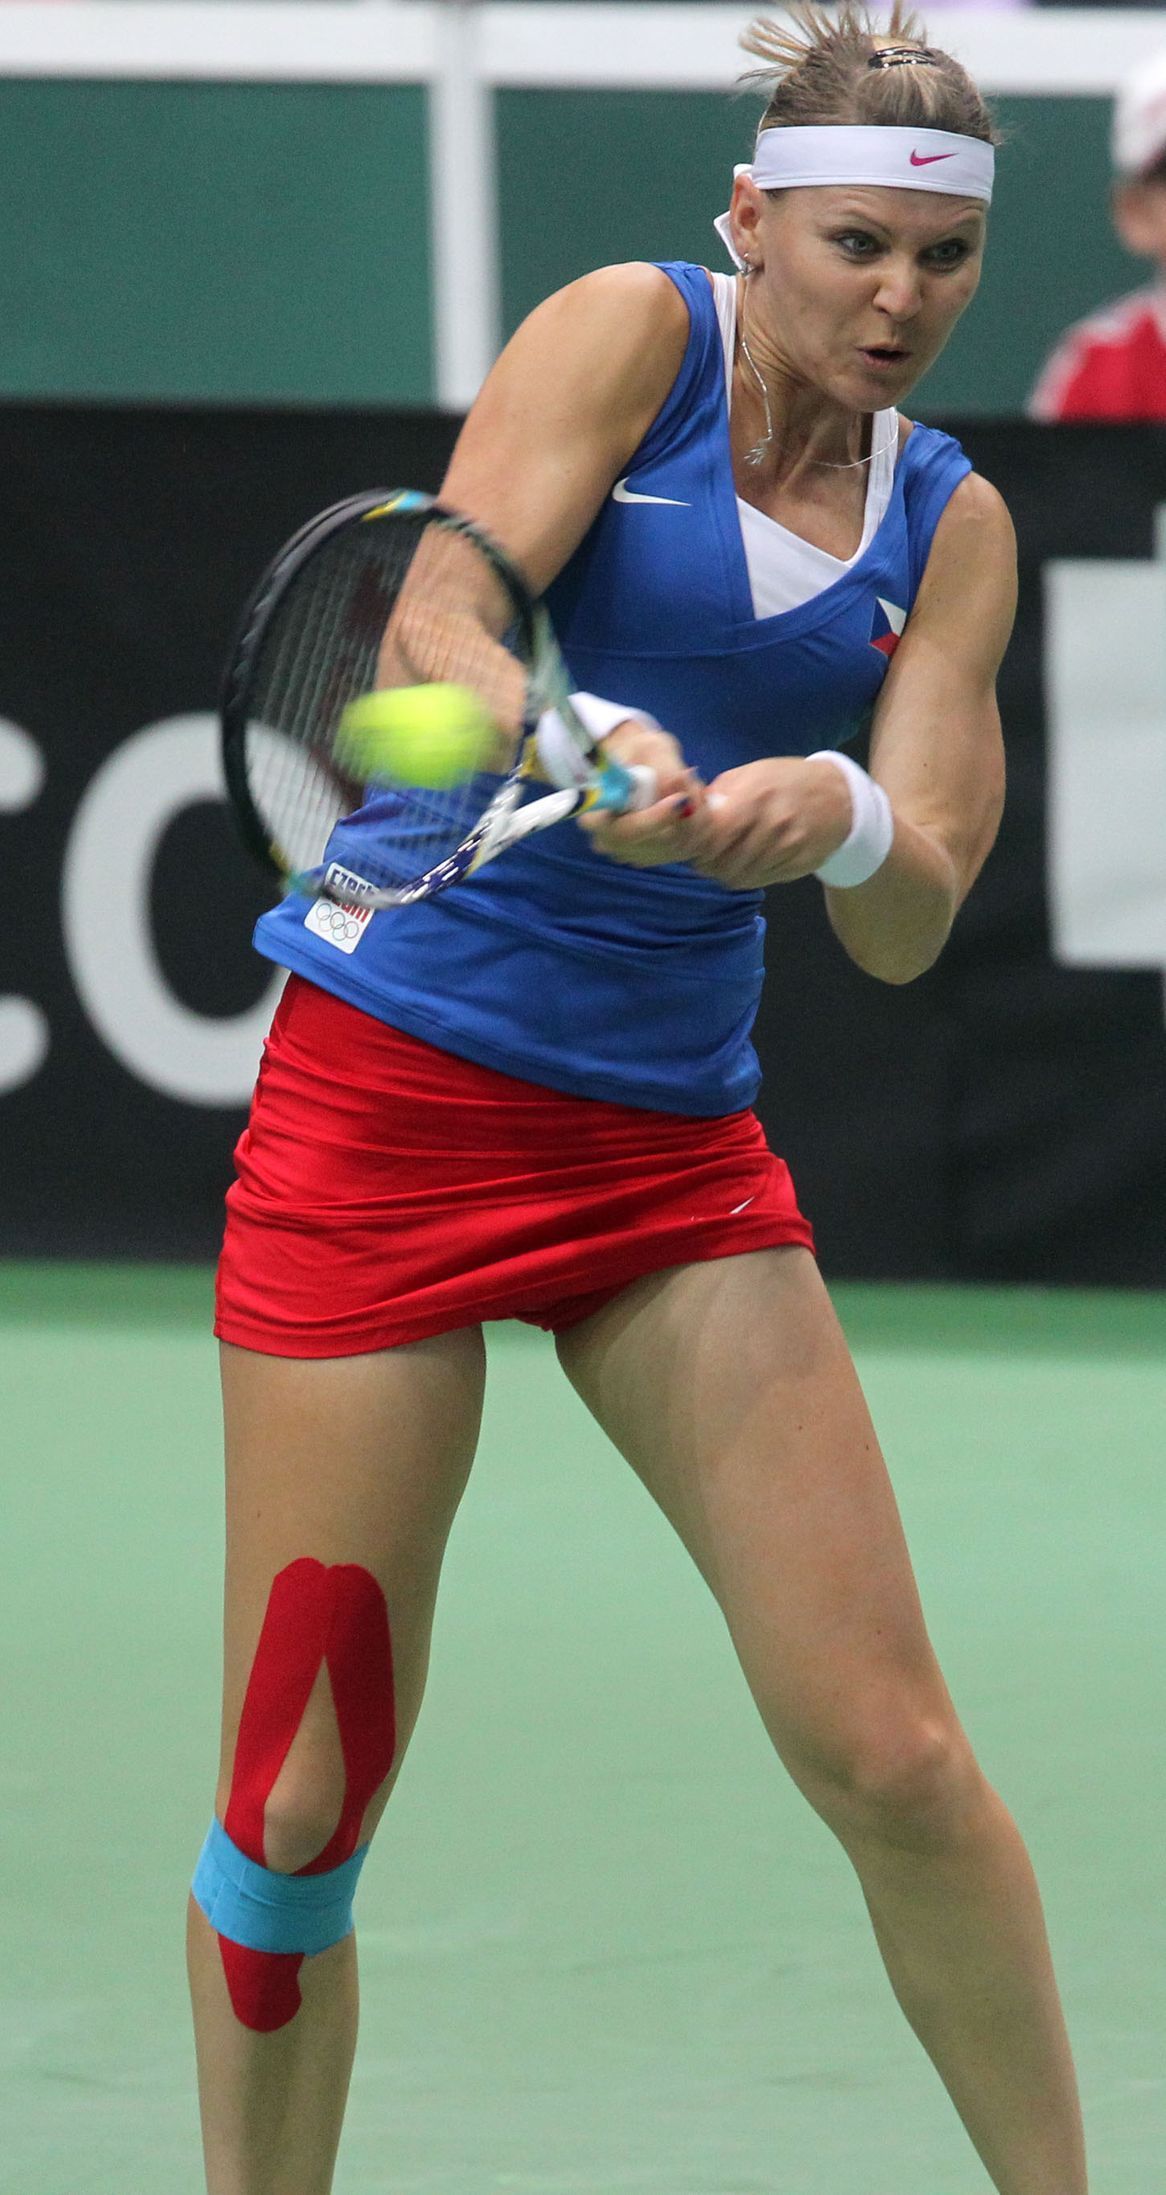 Fed Cup, Česko - Austrálie: Lucie Šafářová